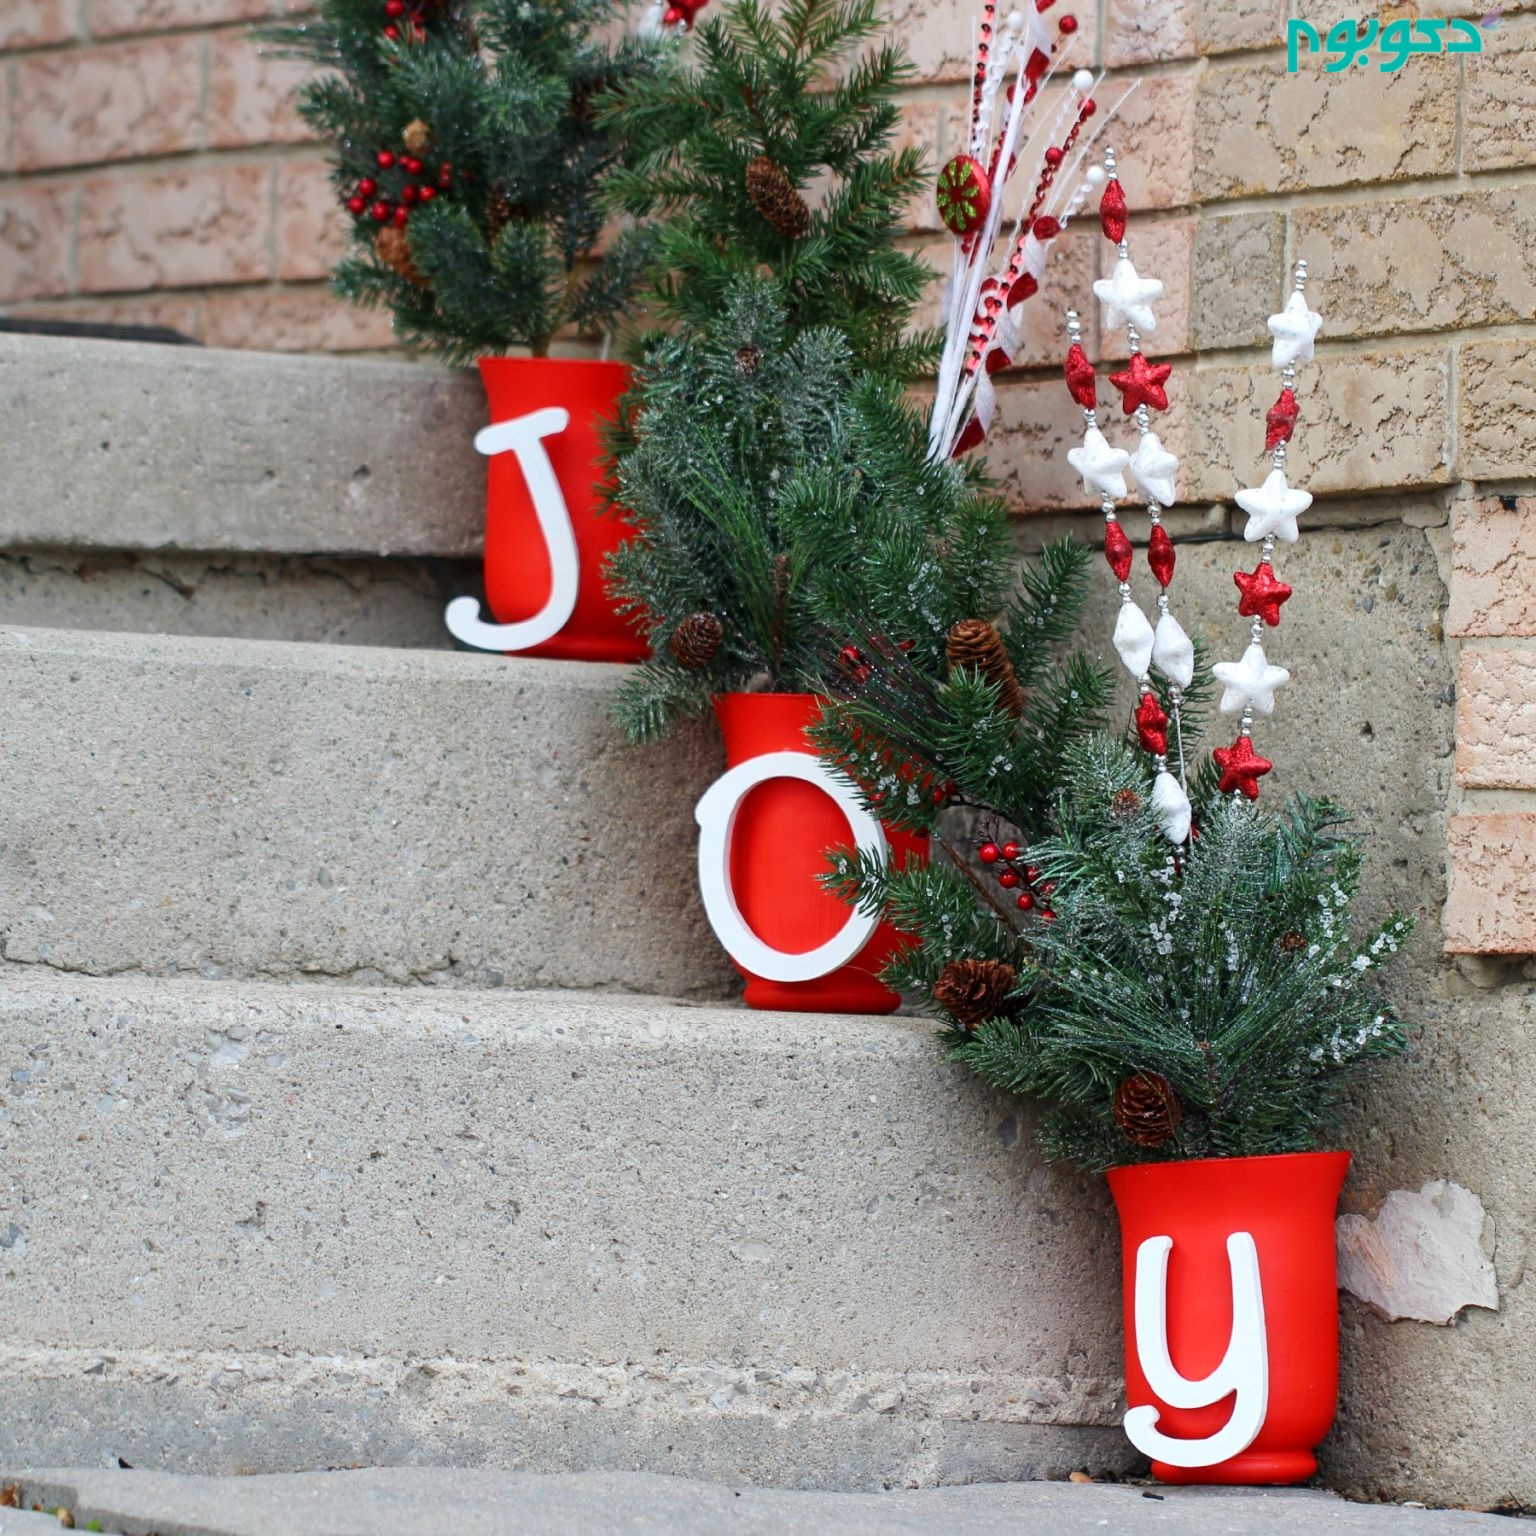 10-joyful-steps-christmas-door-decorations-homebnc-768x768@2x.jpg